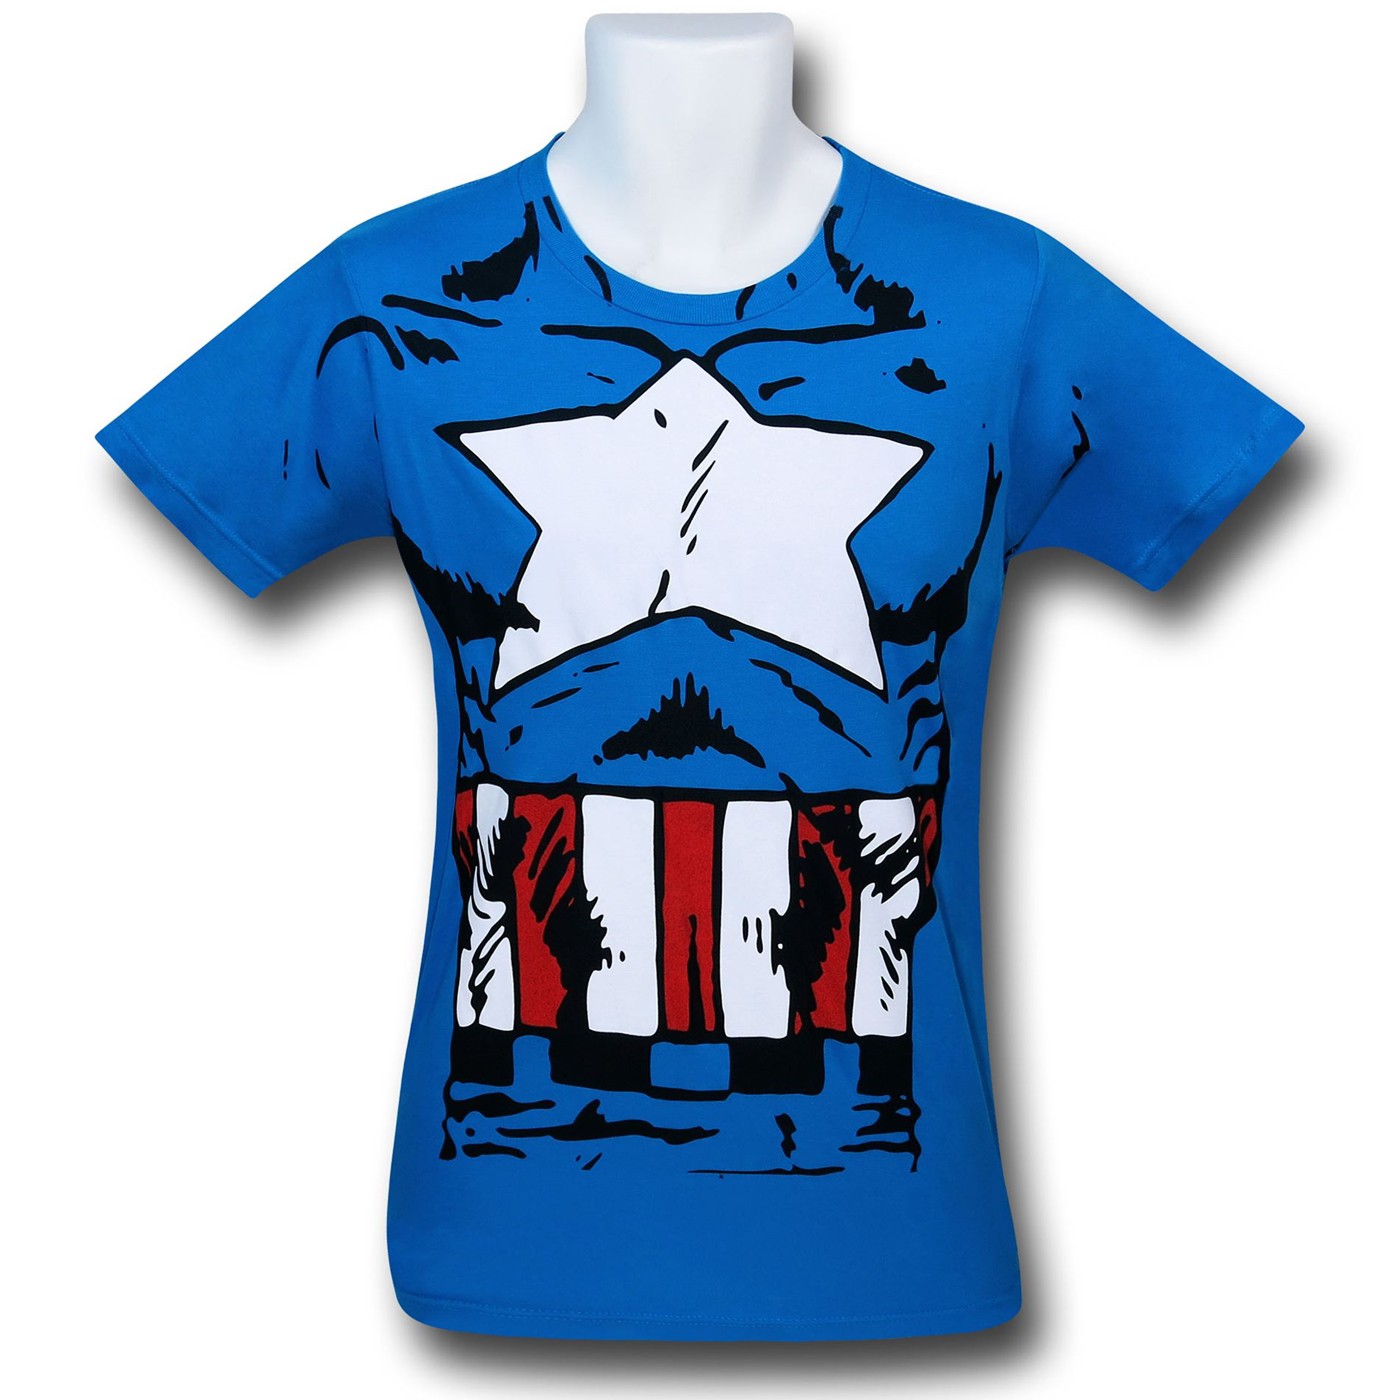 Captain America Musculature Costume T-Shirt